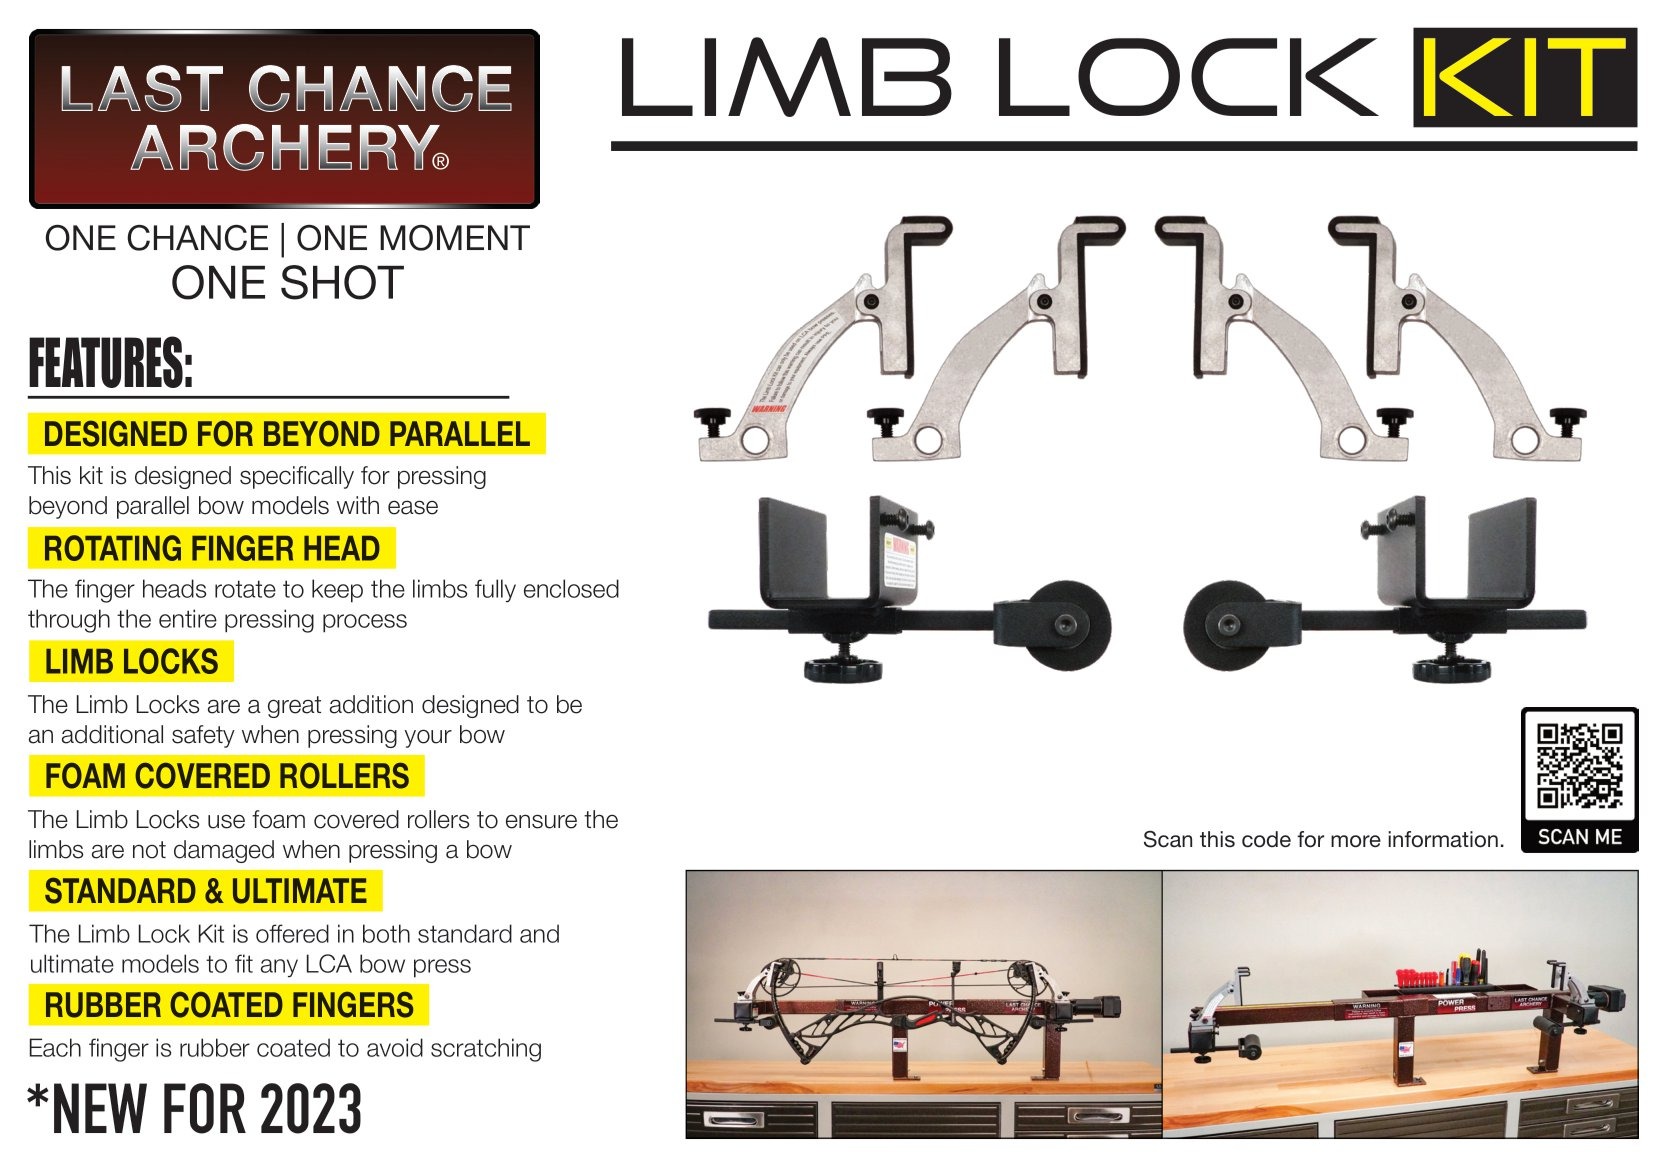 Limb Lock Kit Promotion